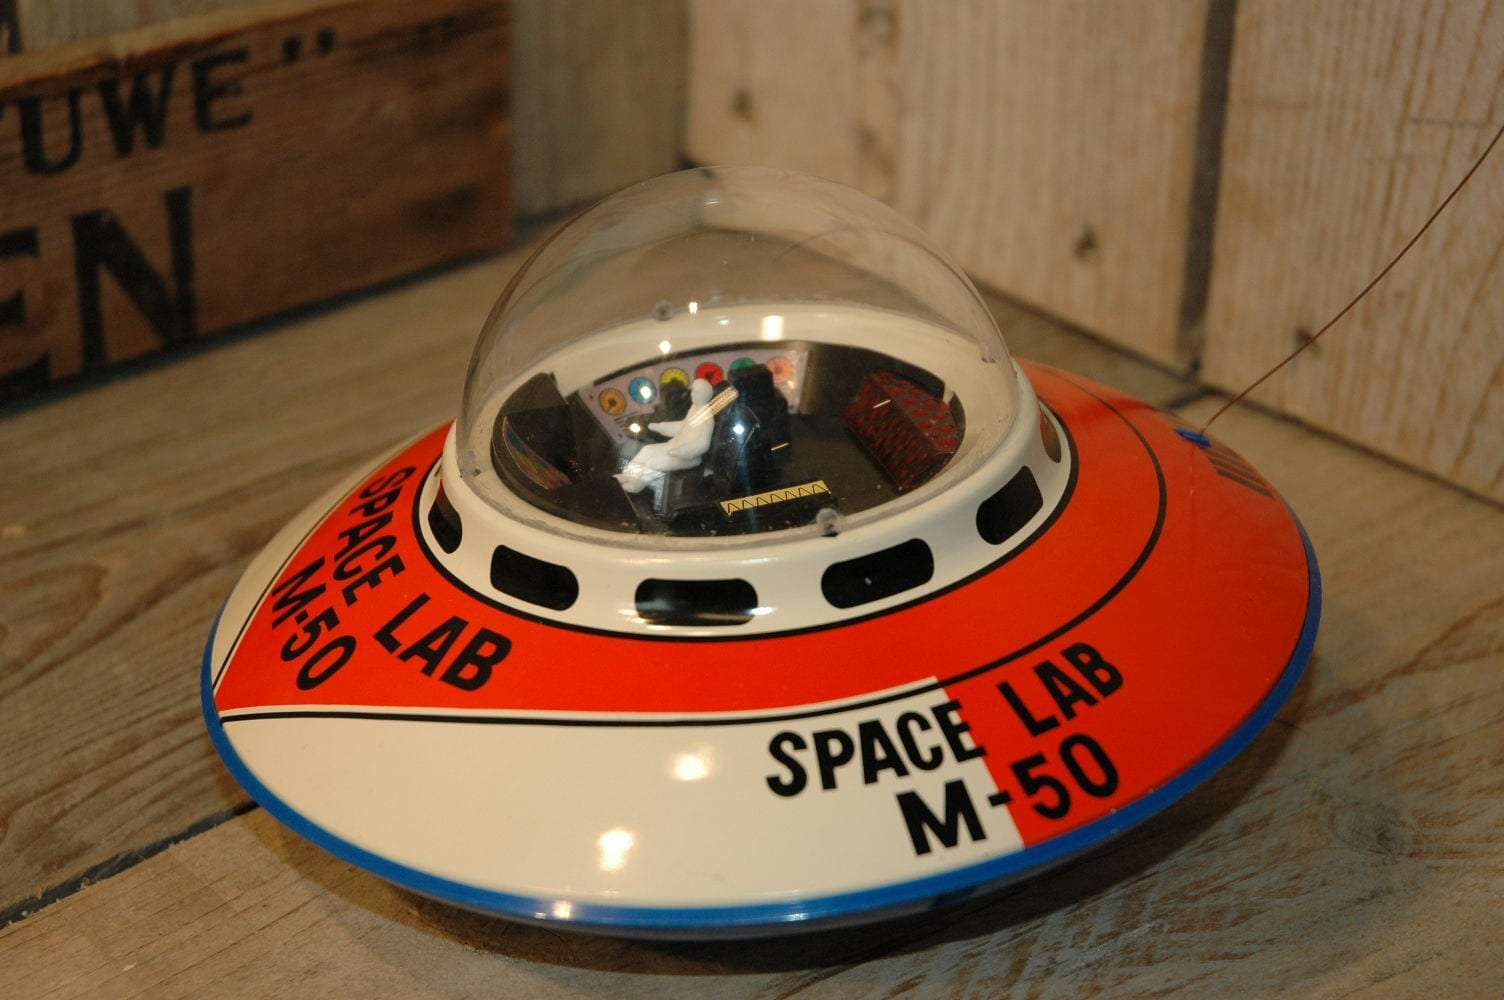 Modern Toys - Space Lab M-50 1973